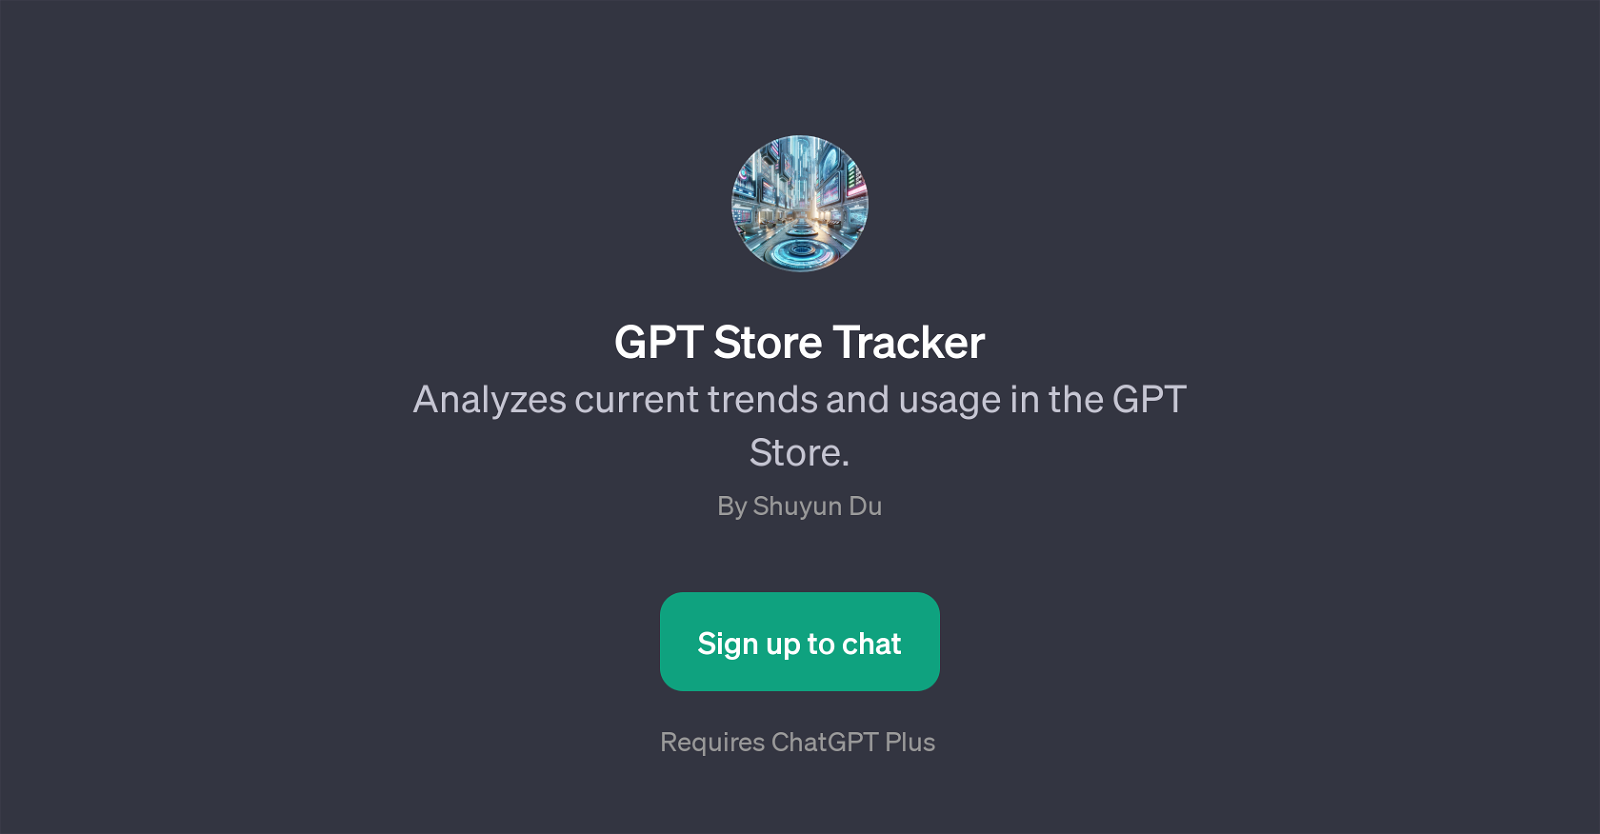 GPT Store Tracker website